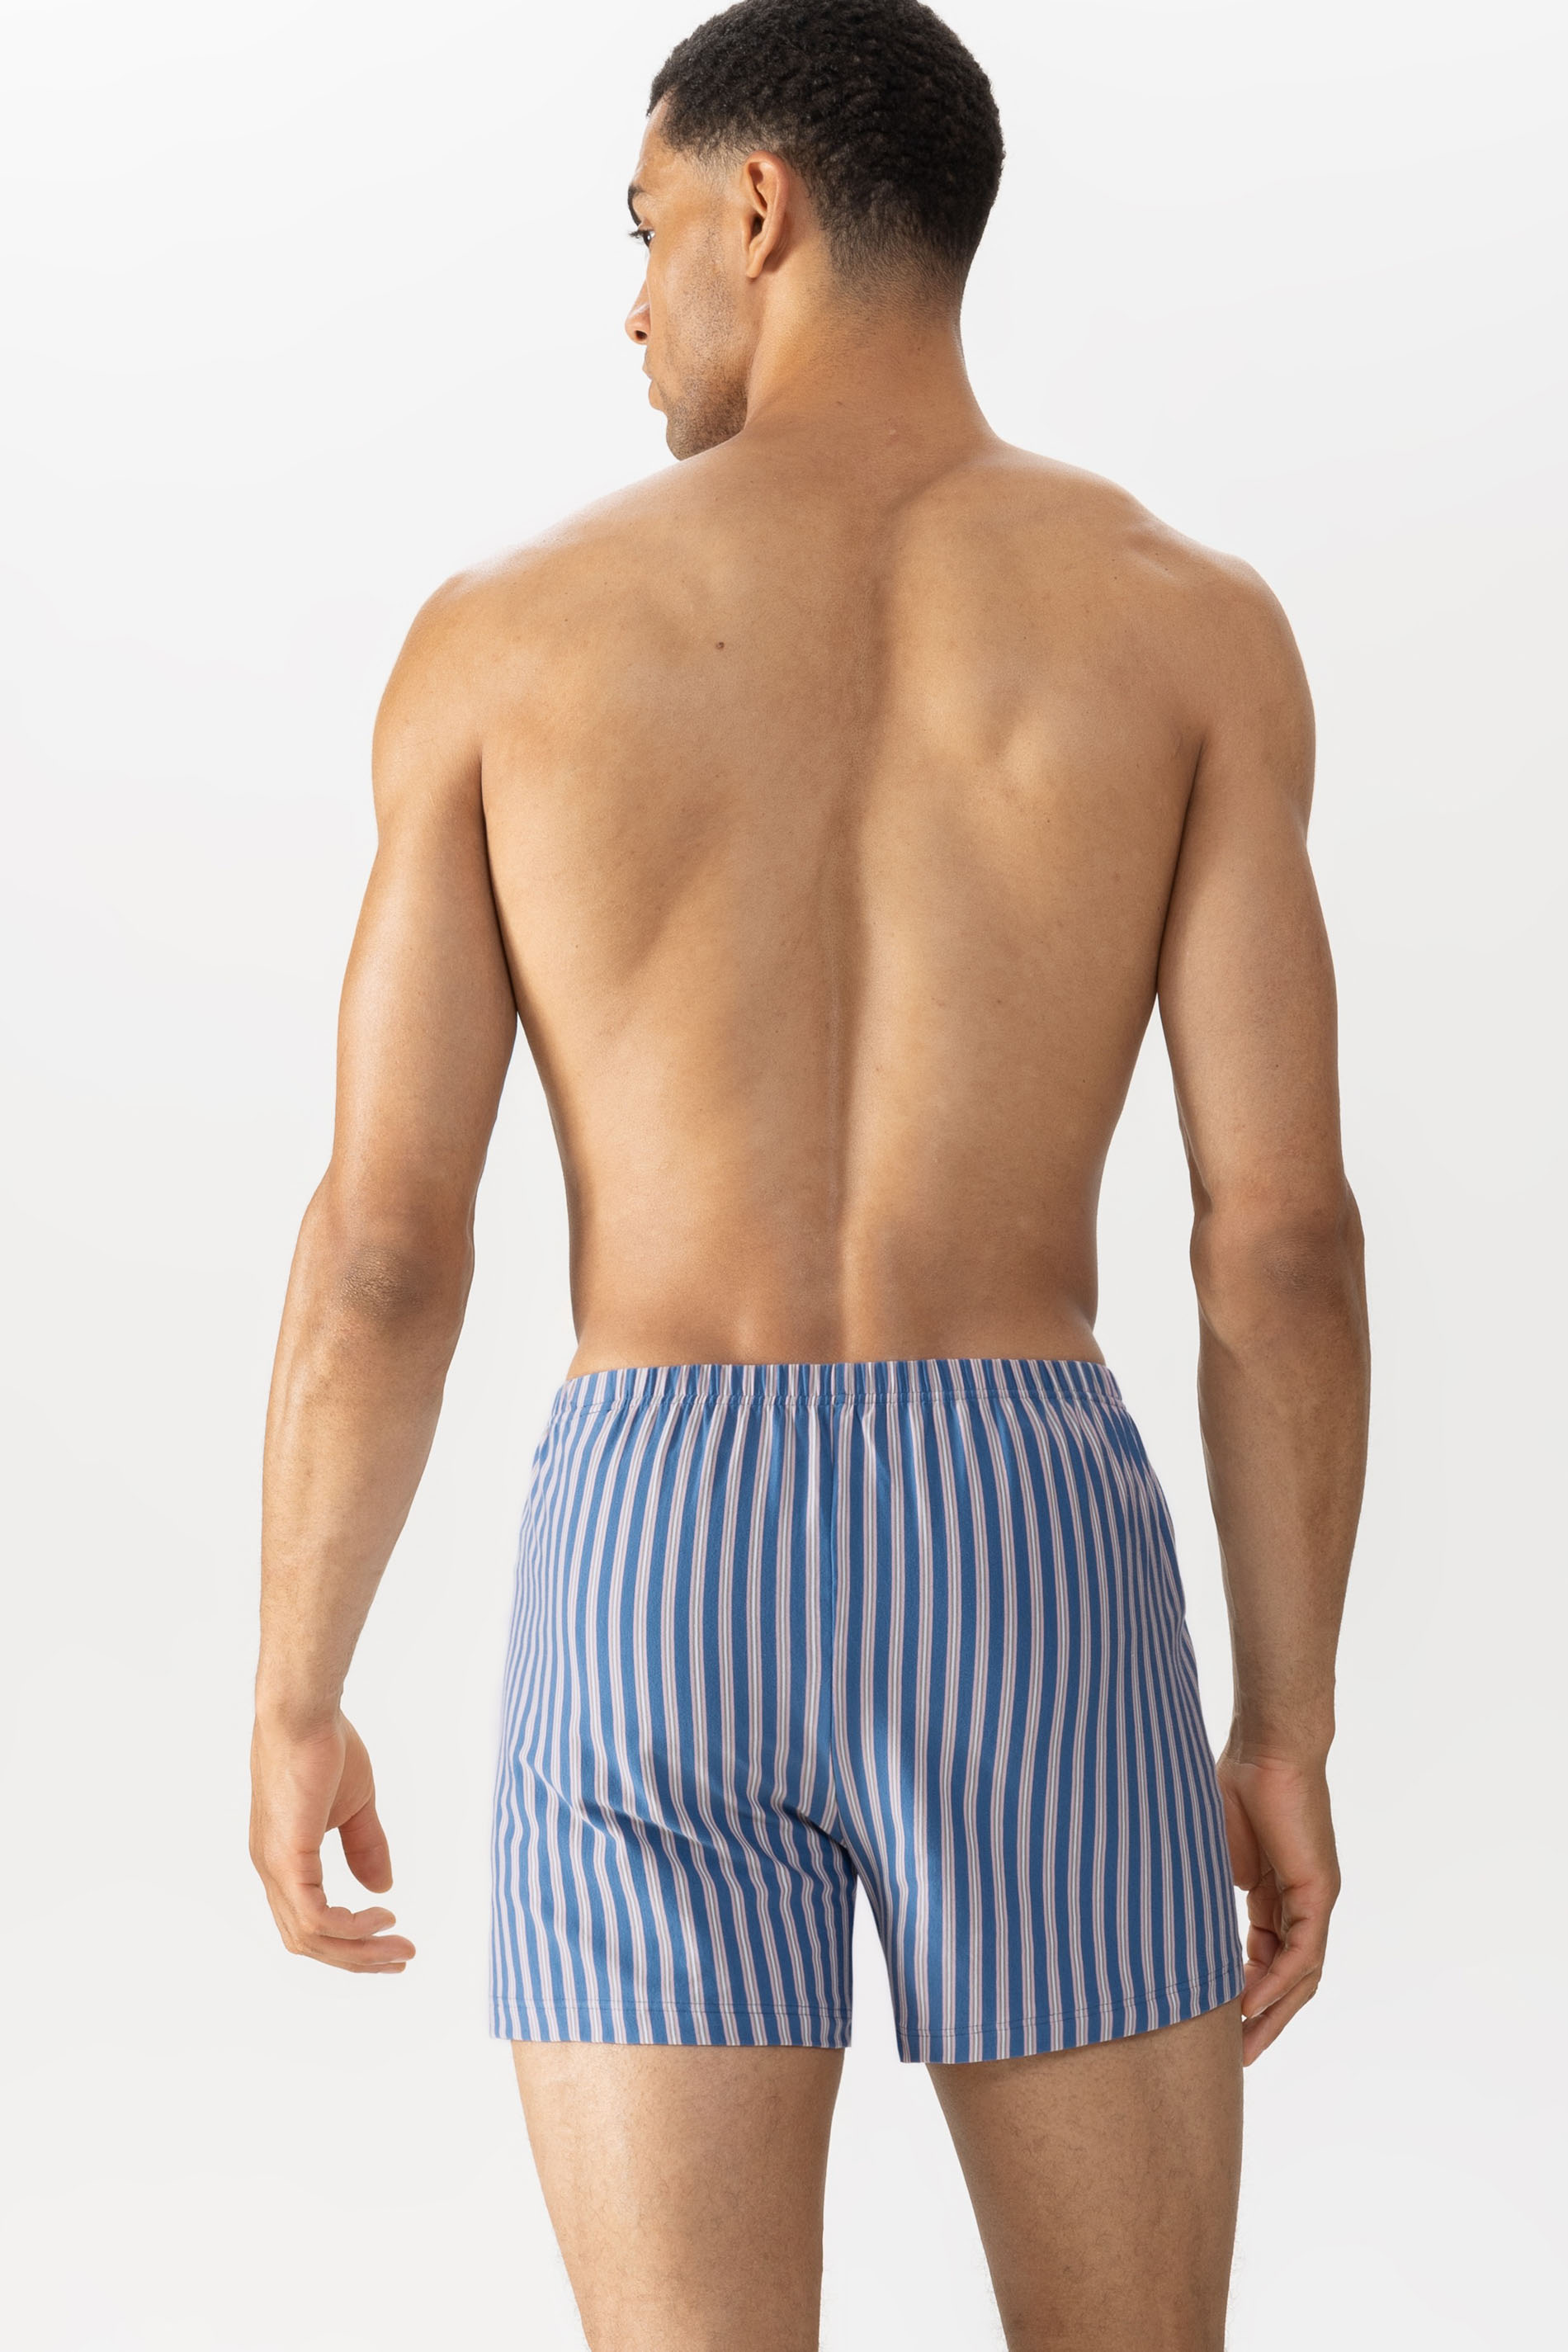 Boxer shorts Serie Blue Stripes Rear View | mey®